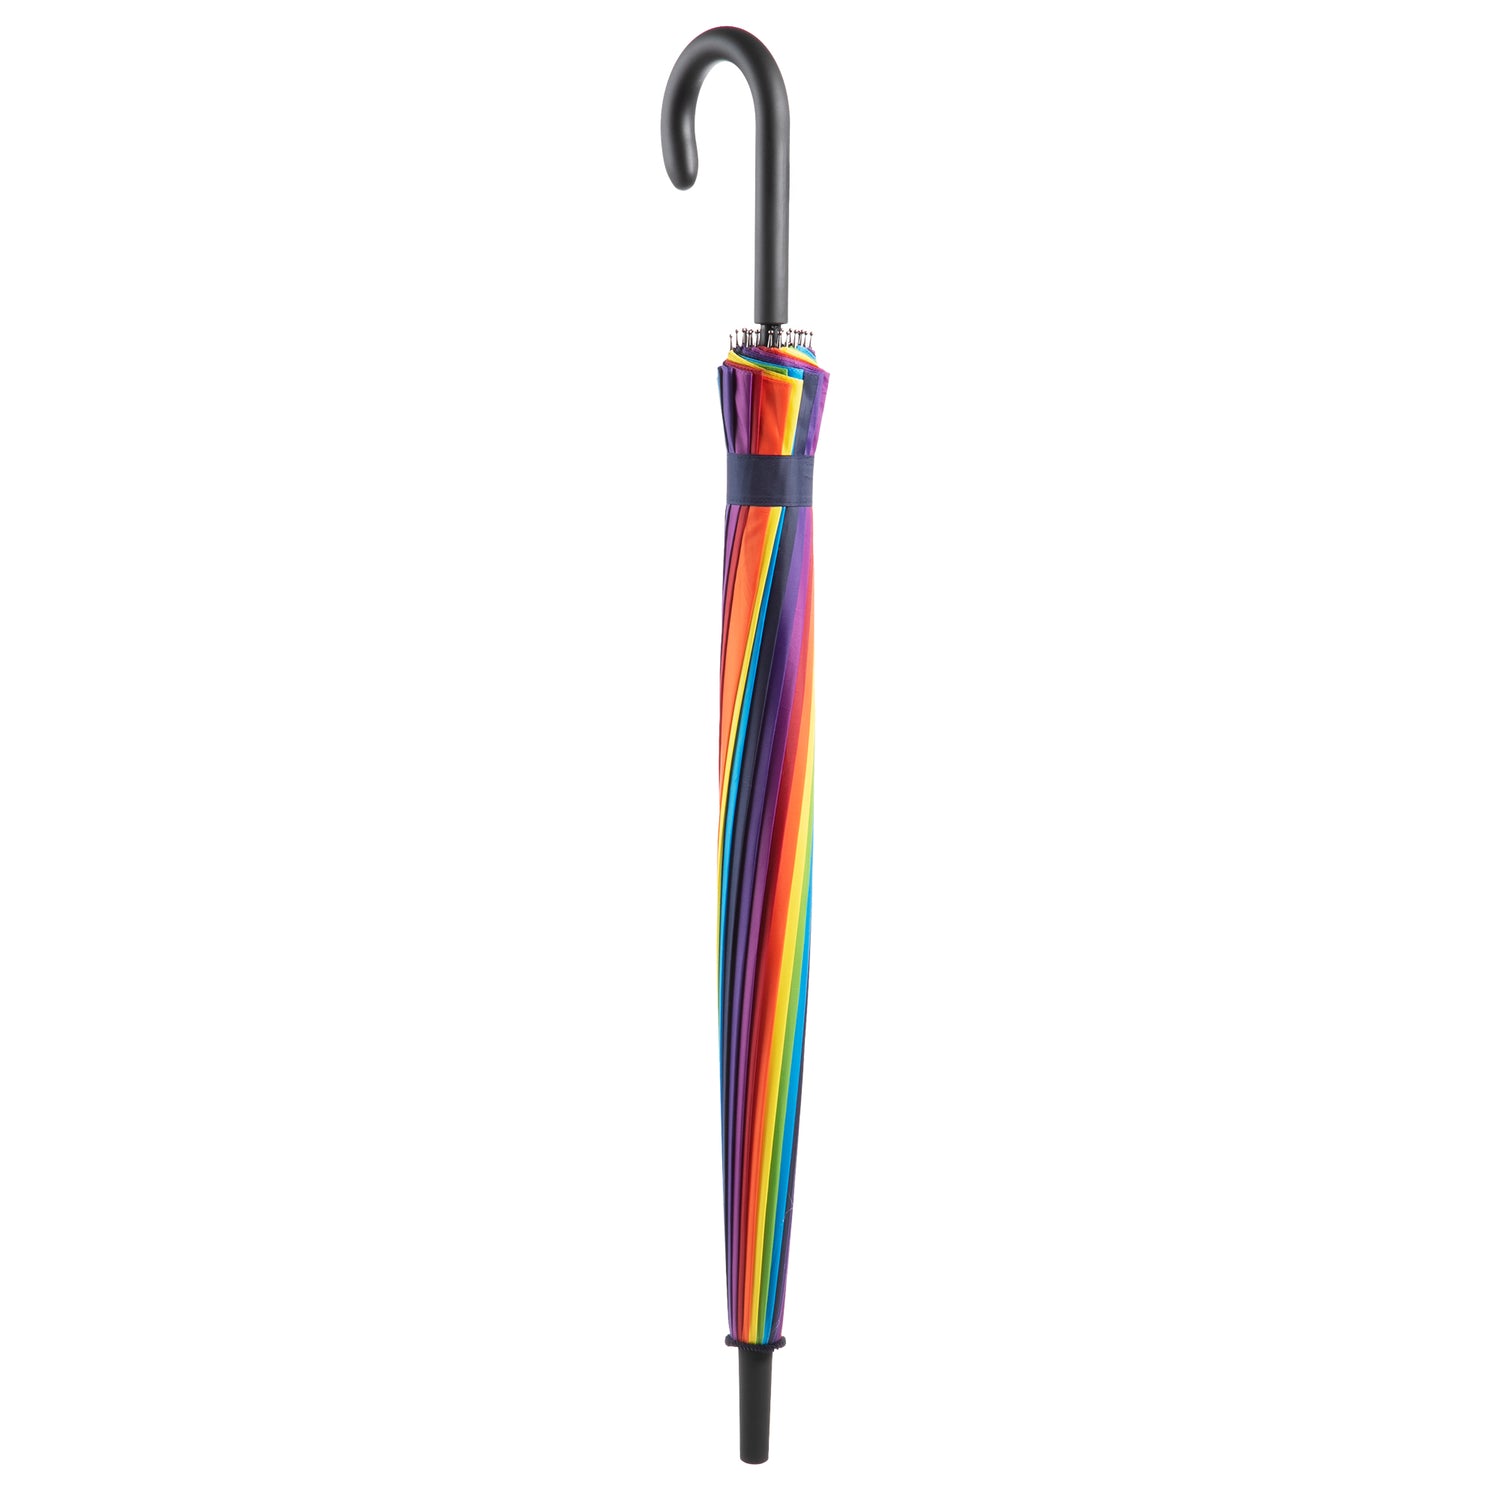 Auto Open Rainbow Stick Umbrella closed